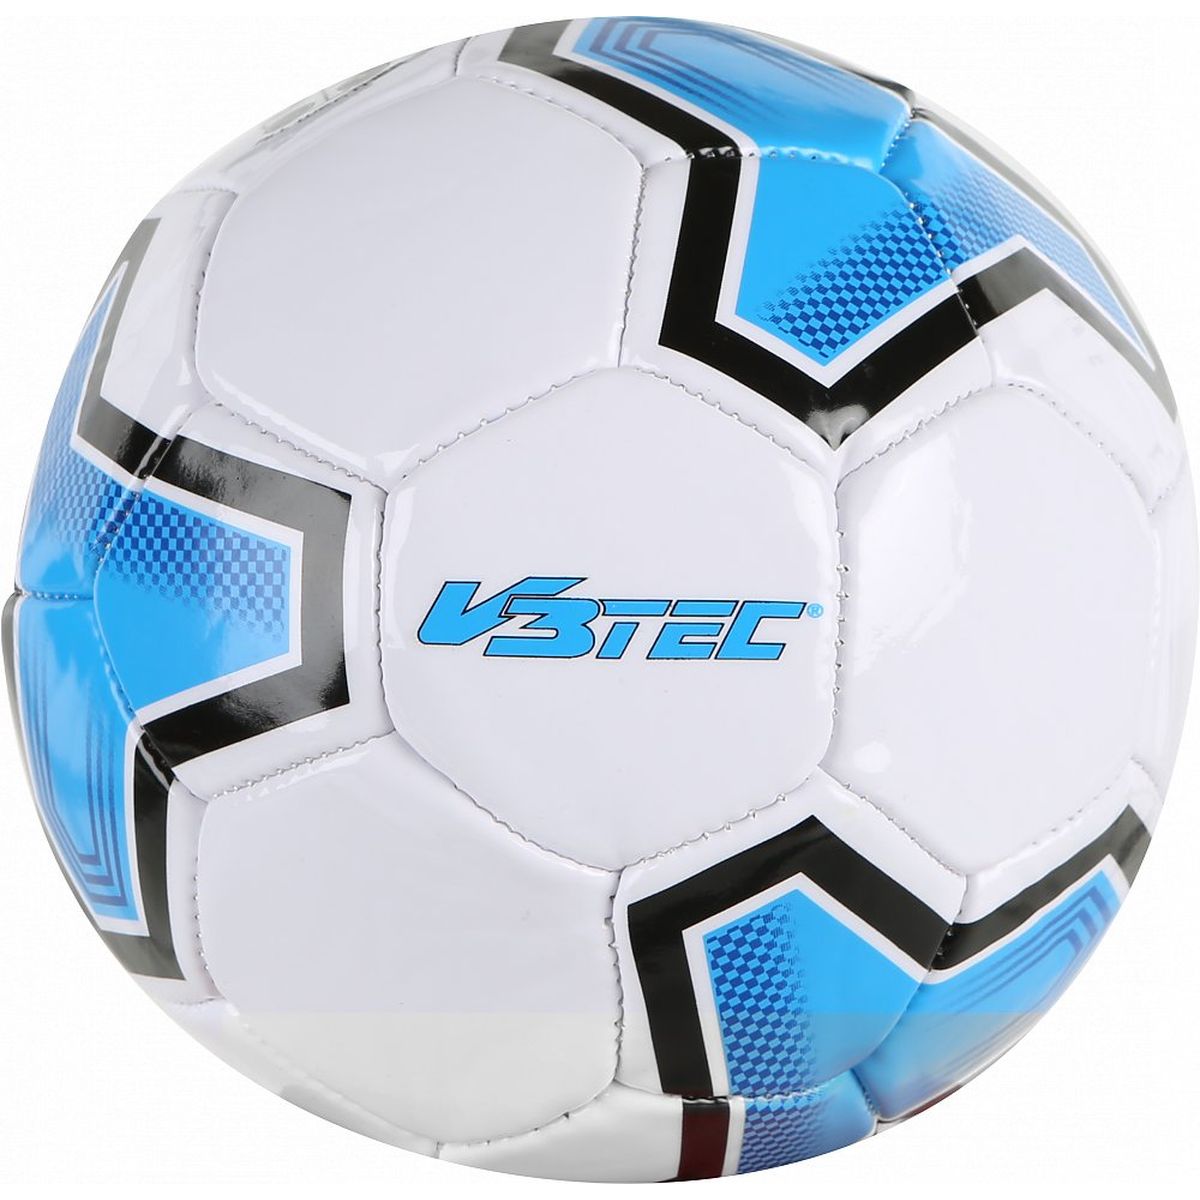 V3Tec Star Mini Fussball Unisex